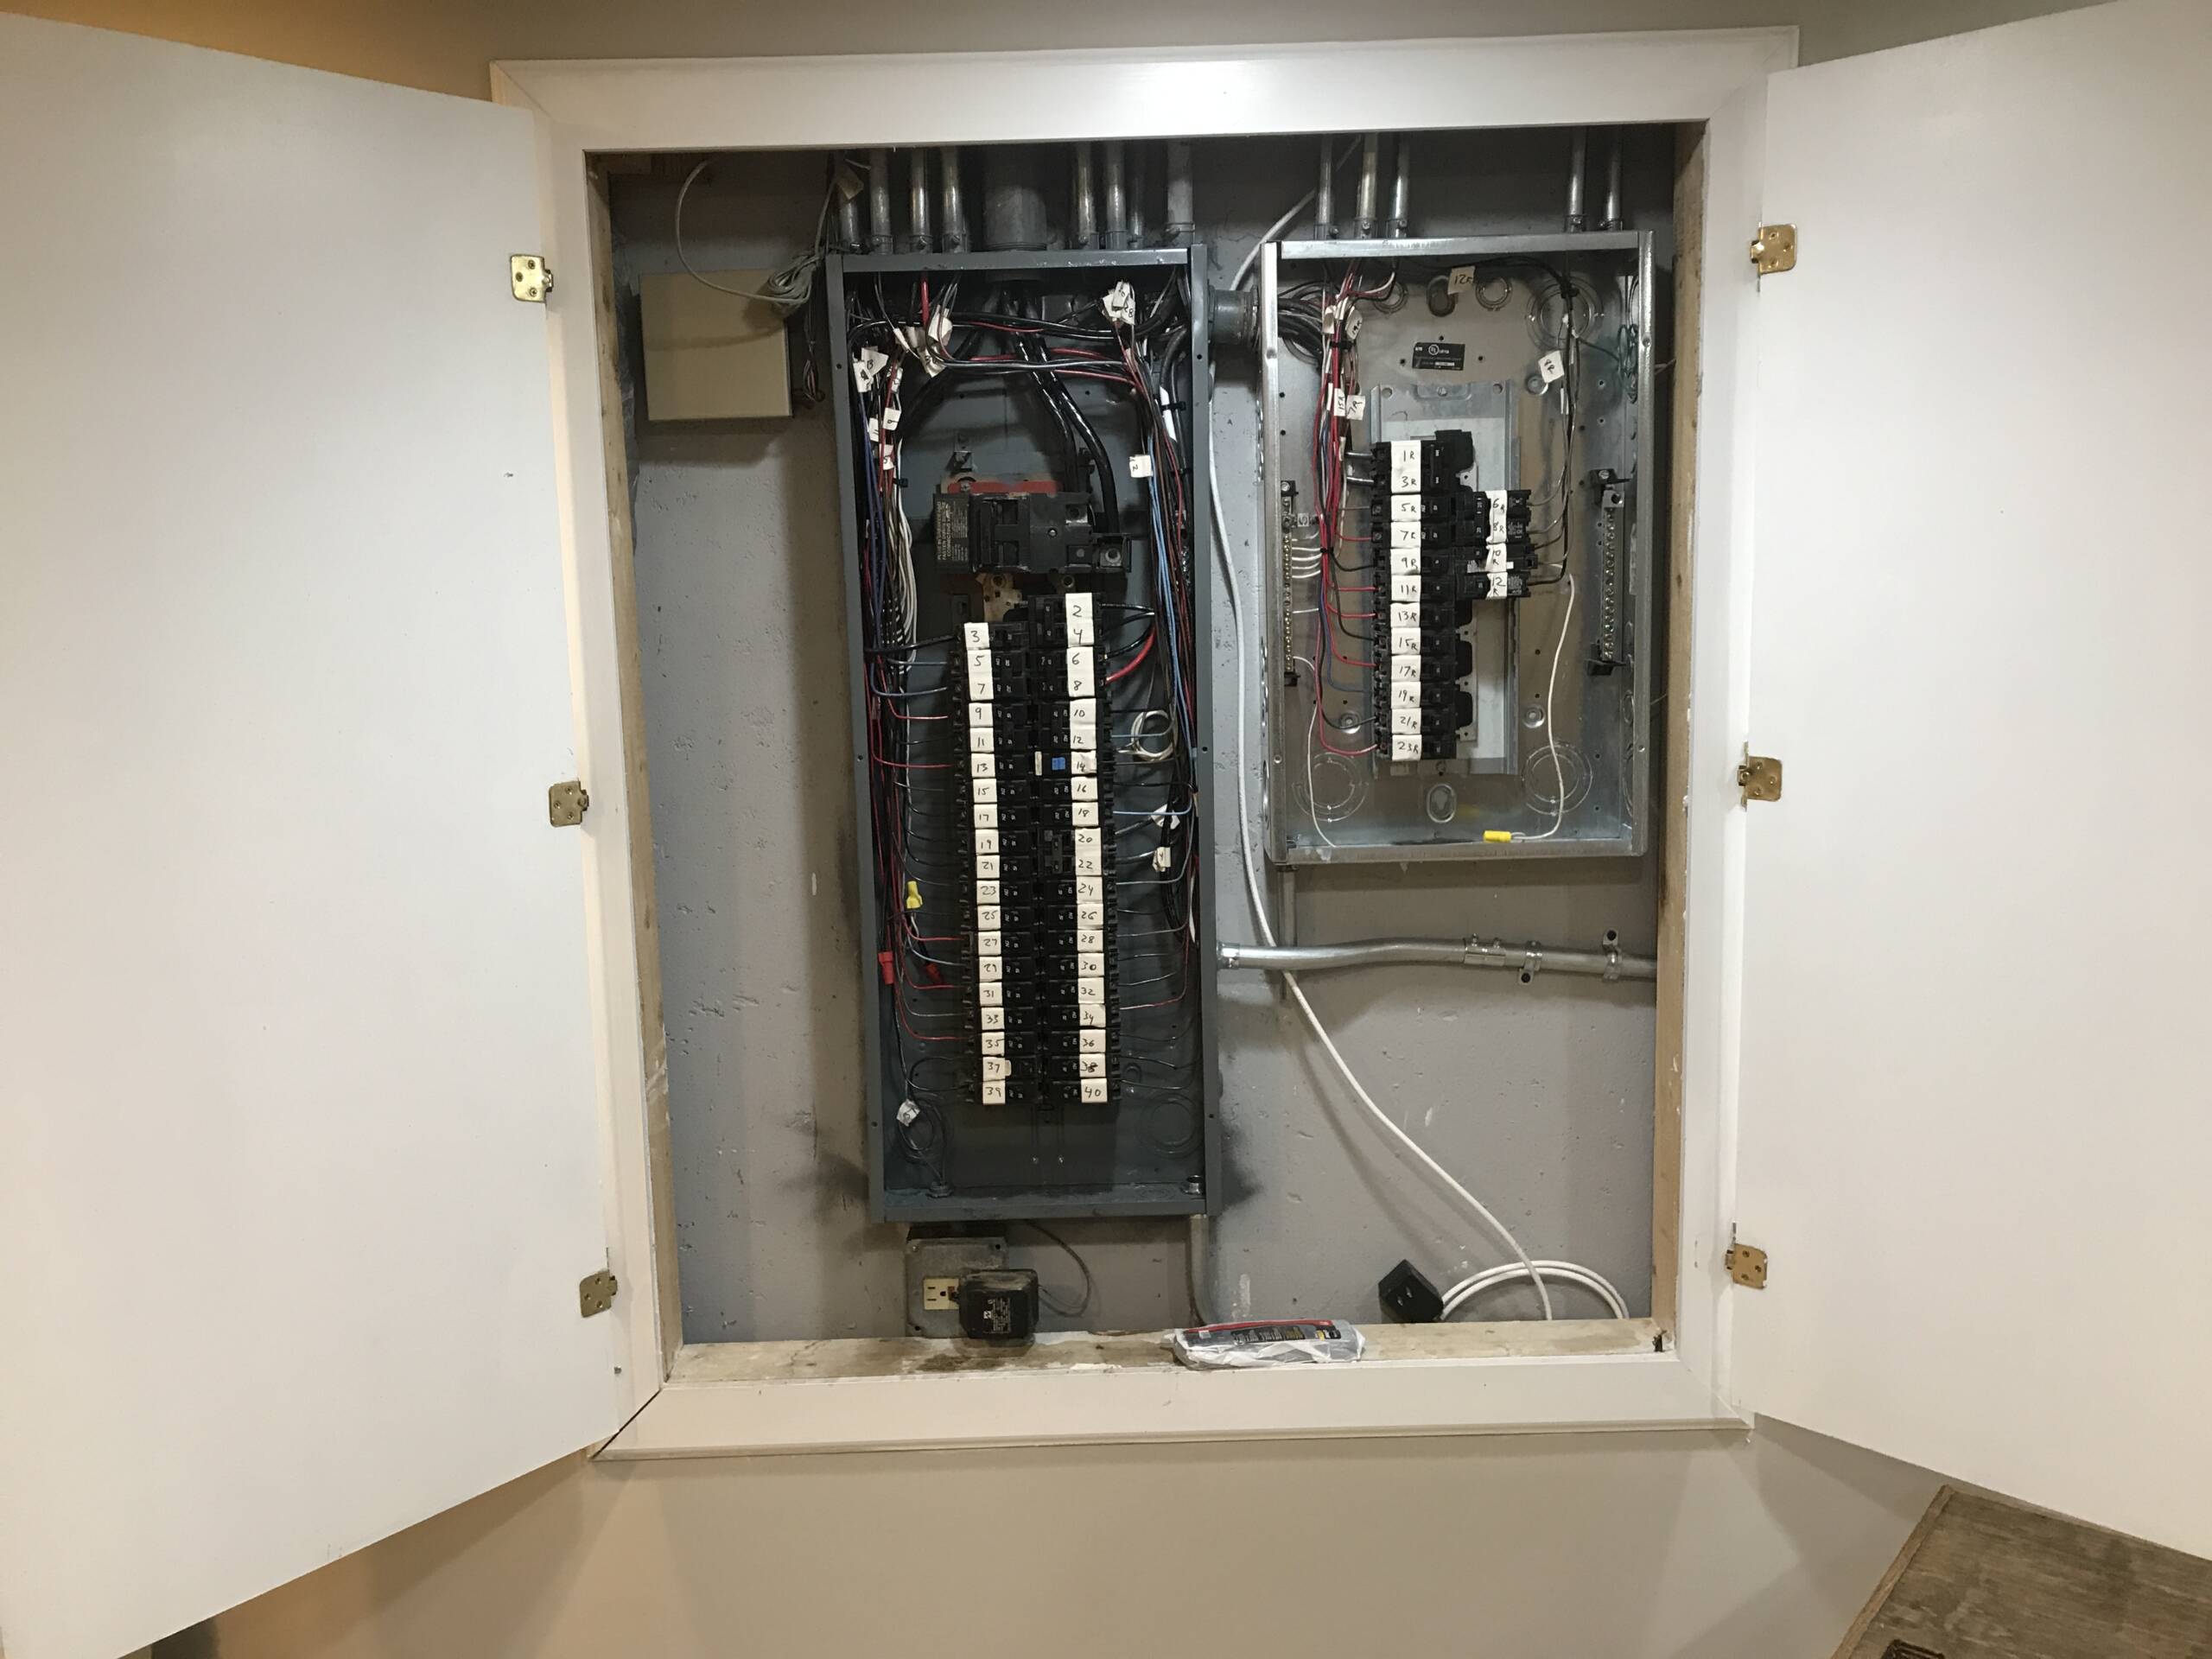 Rebuilding an electrical panel